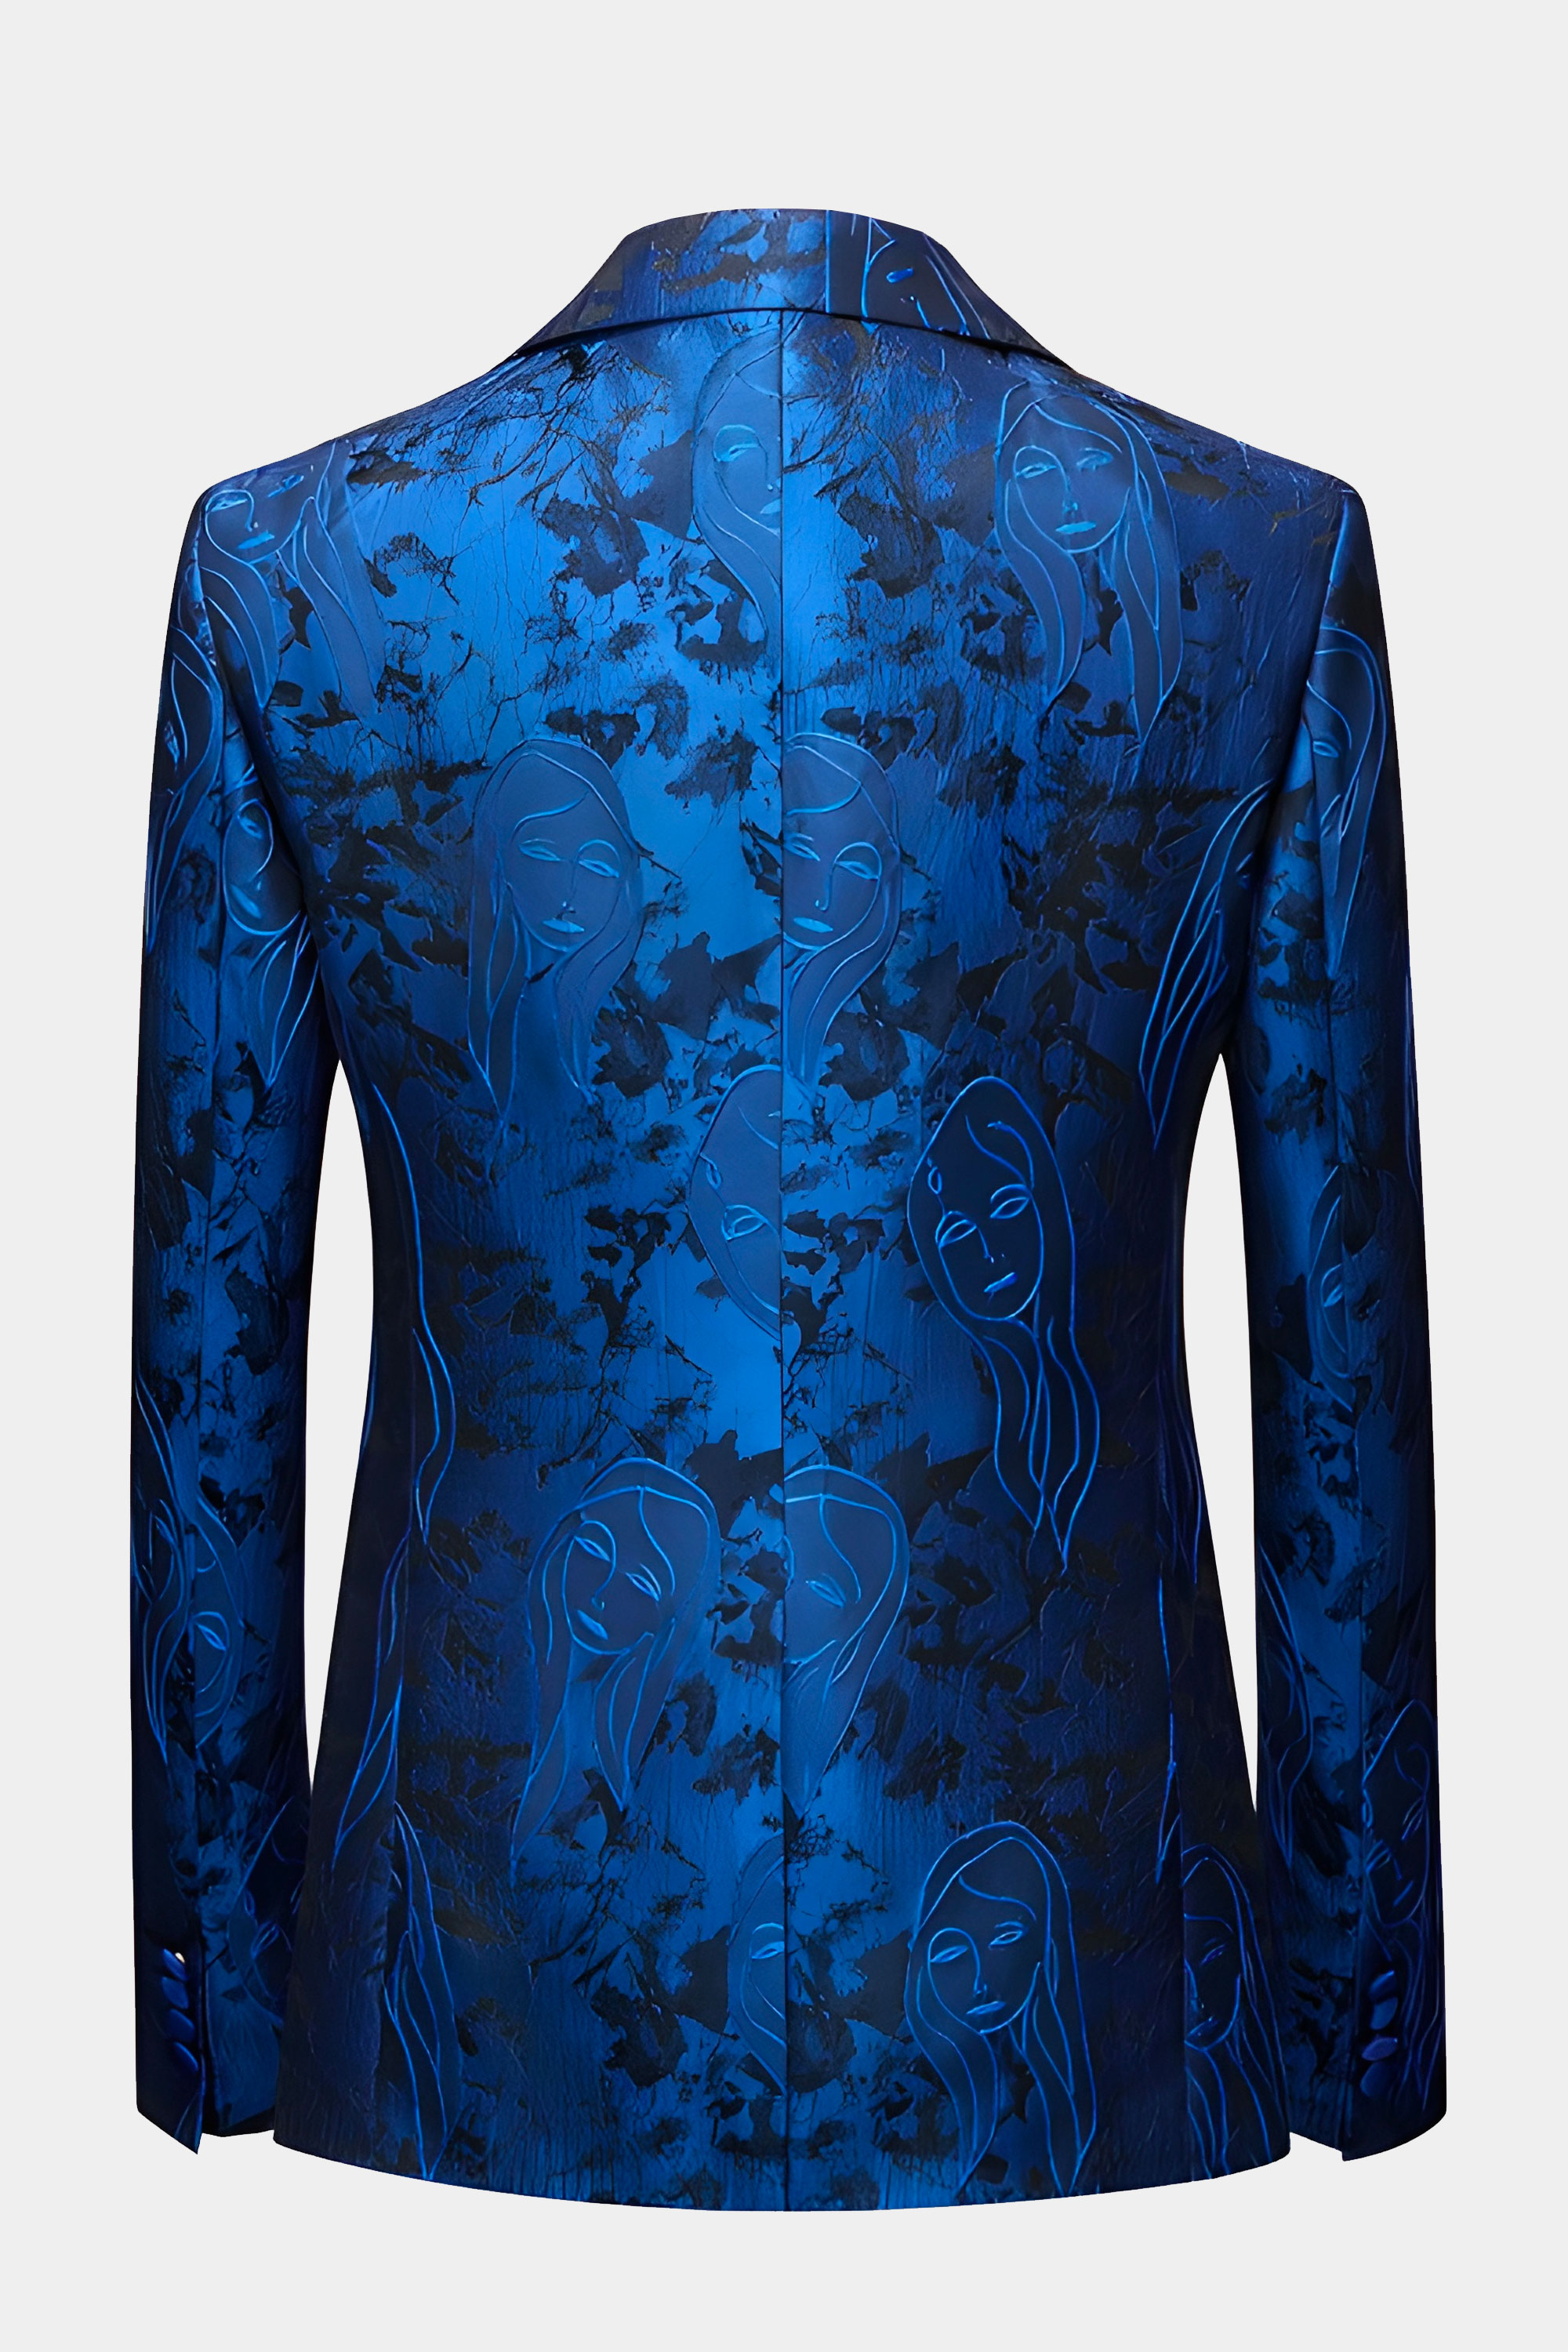 Royal-Blue-Tuxedo-JAcket-Geisha-from-Gentlemansguru.com